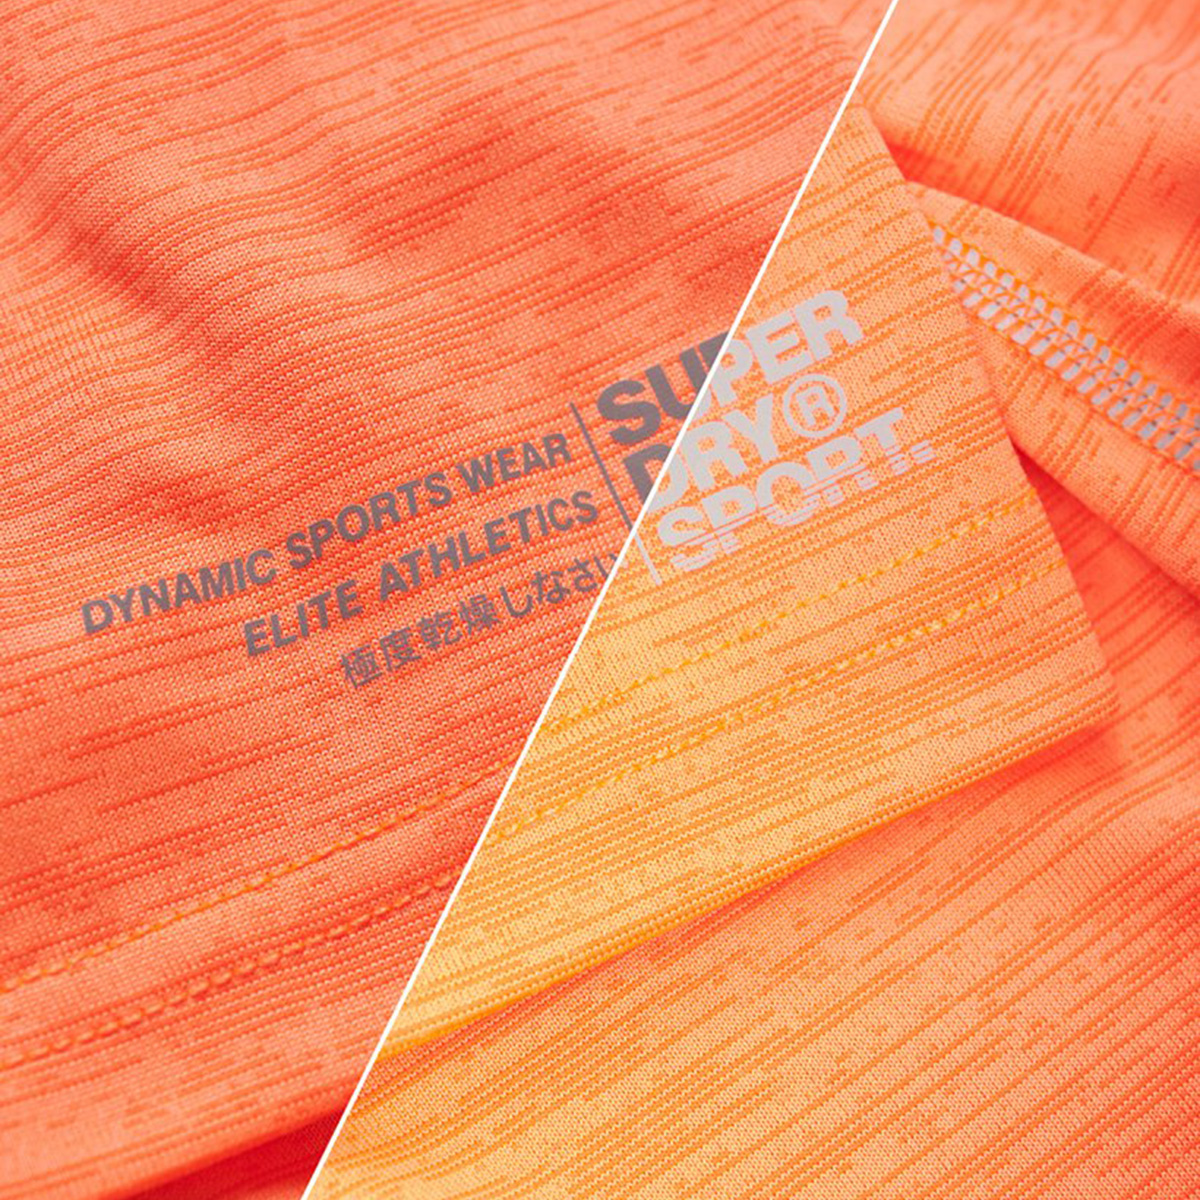 Superdry Herren Training Tee Sport Shirt T-Shirt MS300071A orange